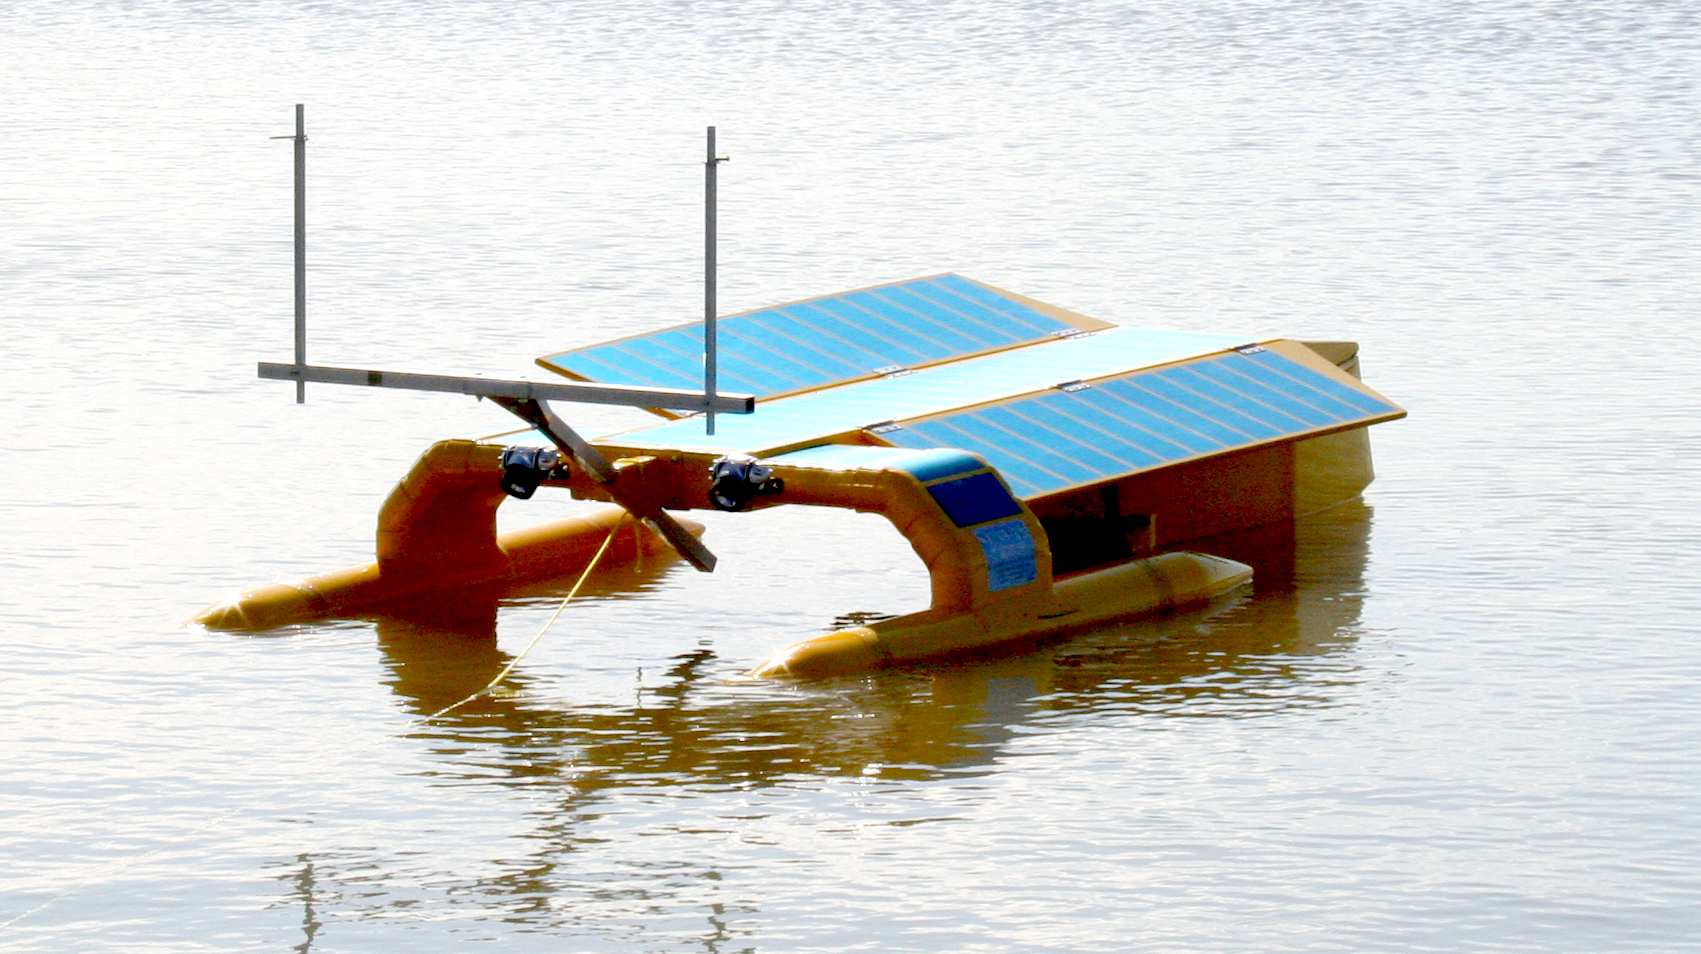 Solar powered autonomous ocean plastic cleaning boat